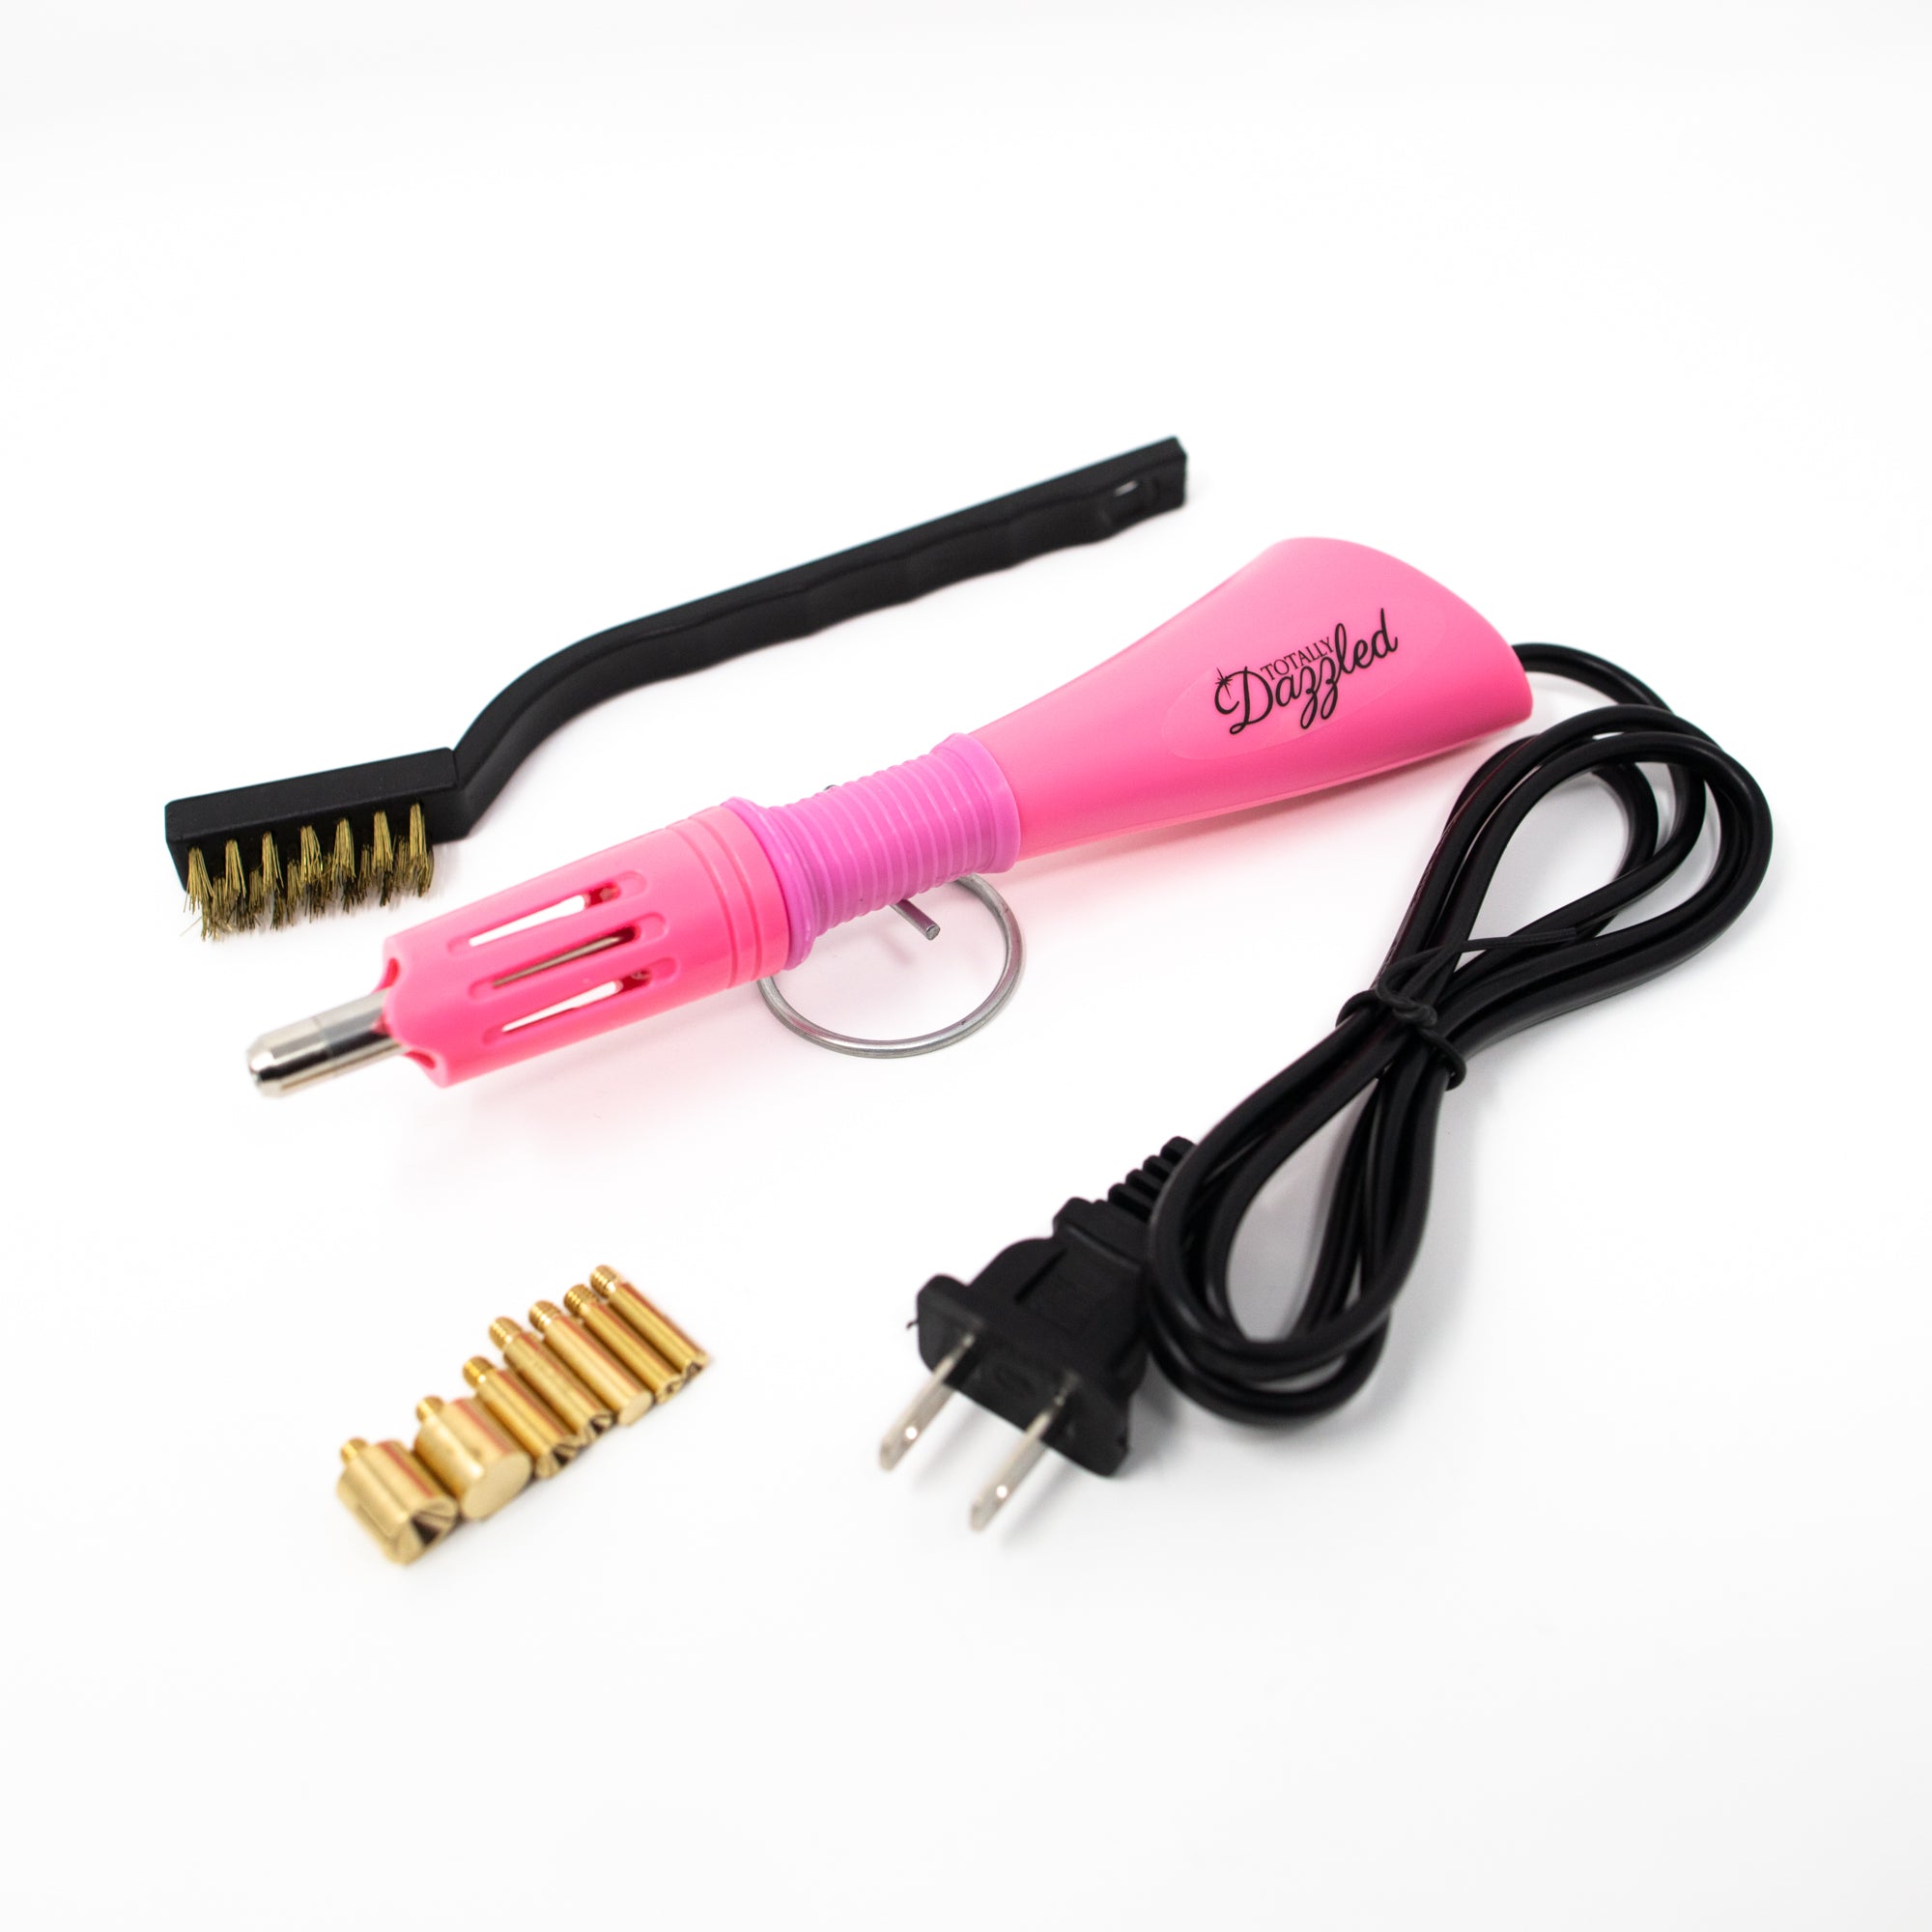 Pink Wax picker tool set Katana similar